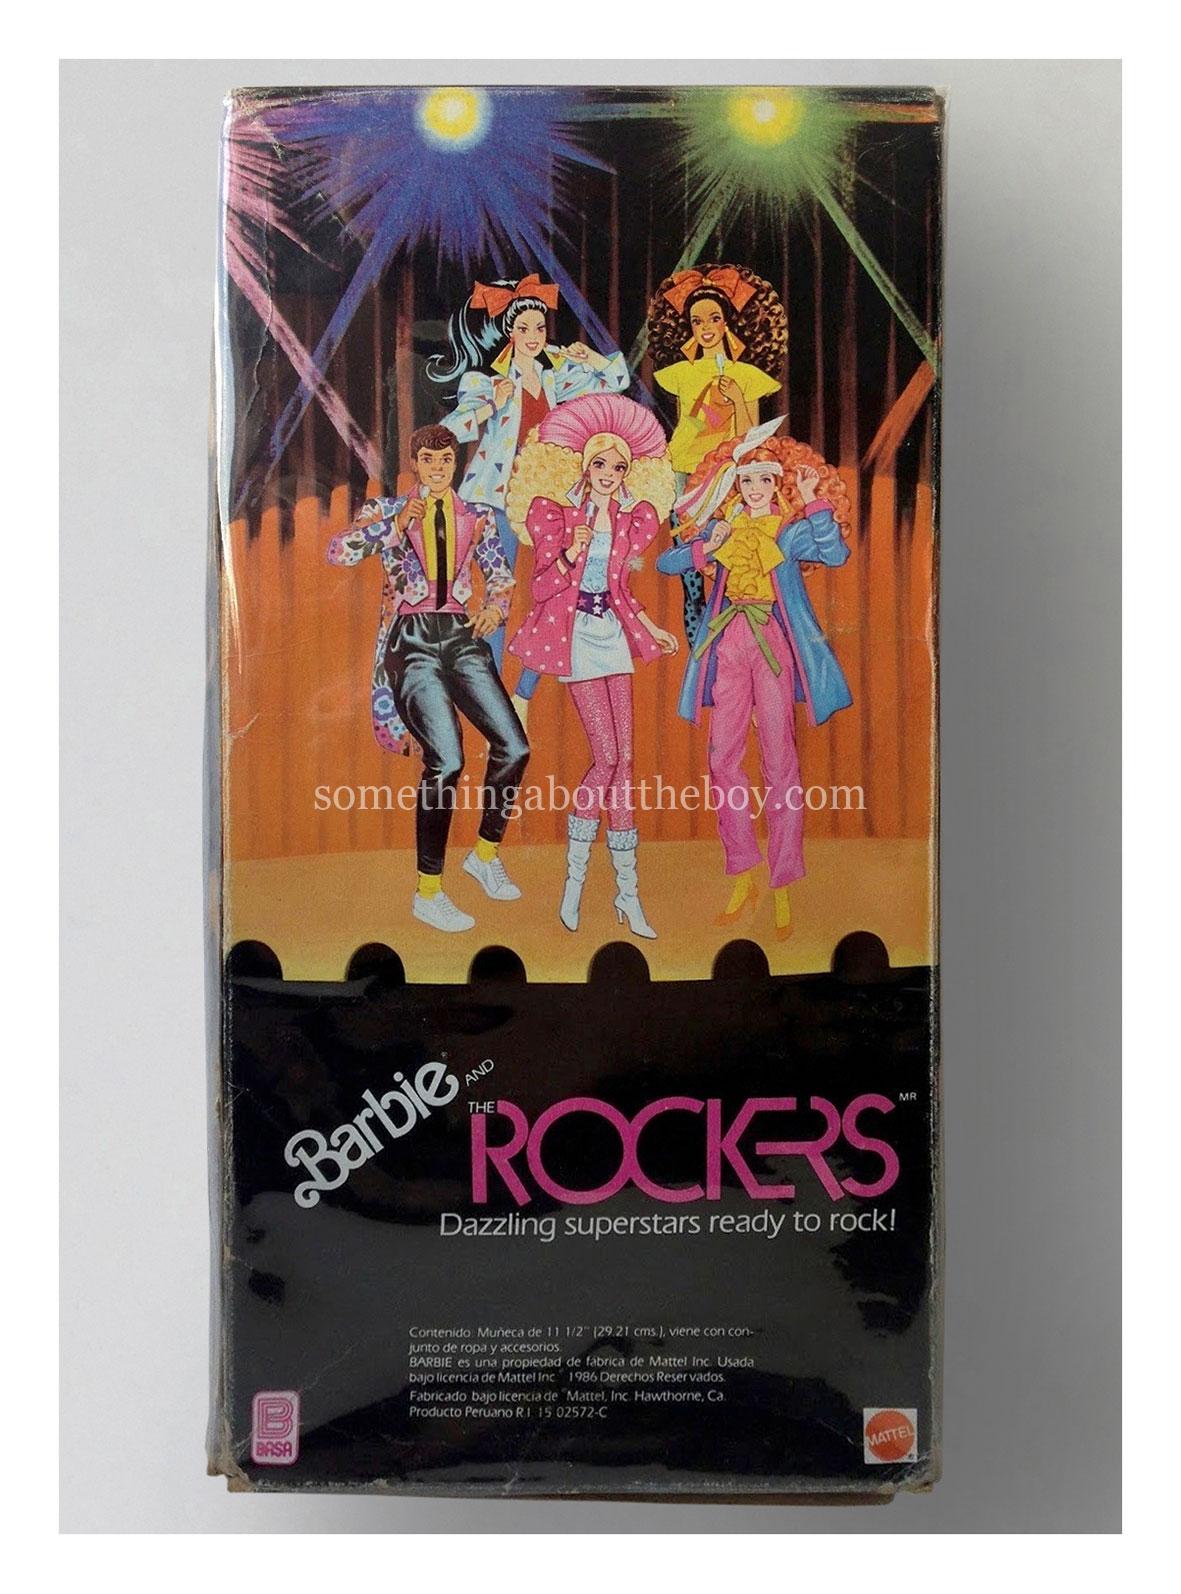 1987 Reverse of Basa Peru Rockers packaging